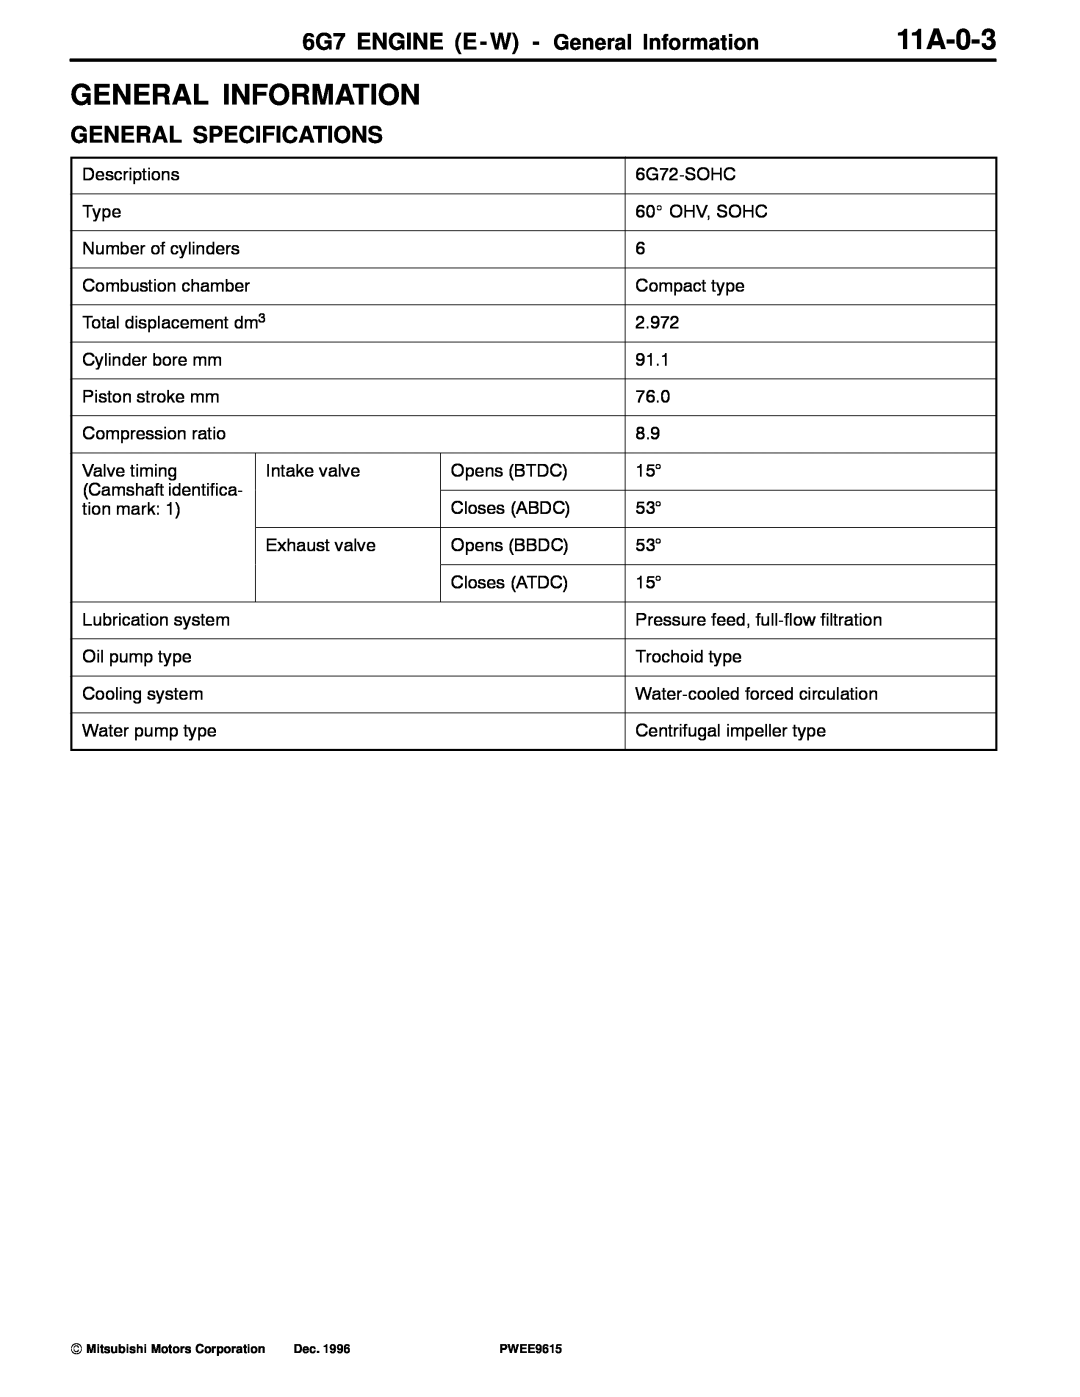 Mitsubishi specifications 11A-0-3, 6G7 ENGINE E - W - General Information, General Specifications 